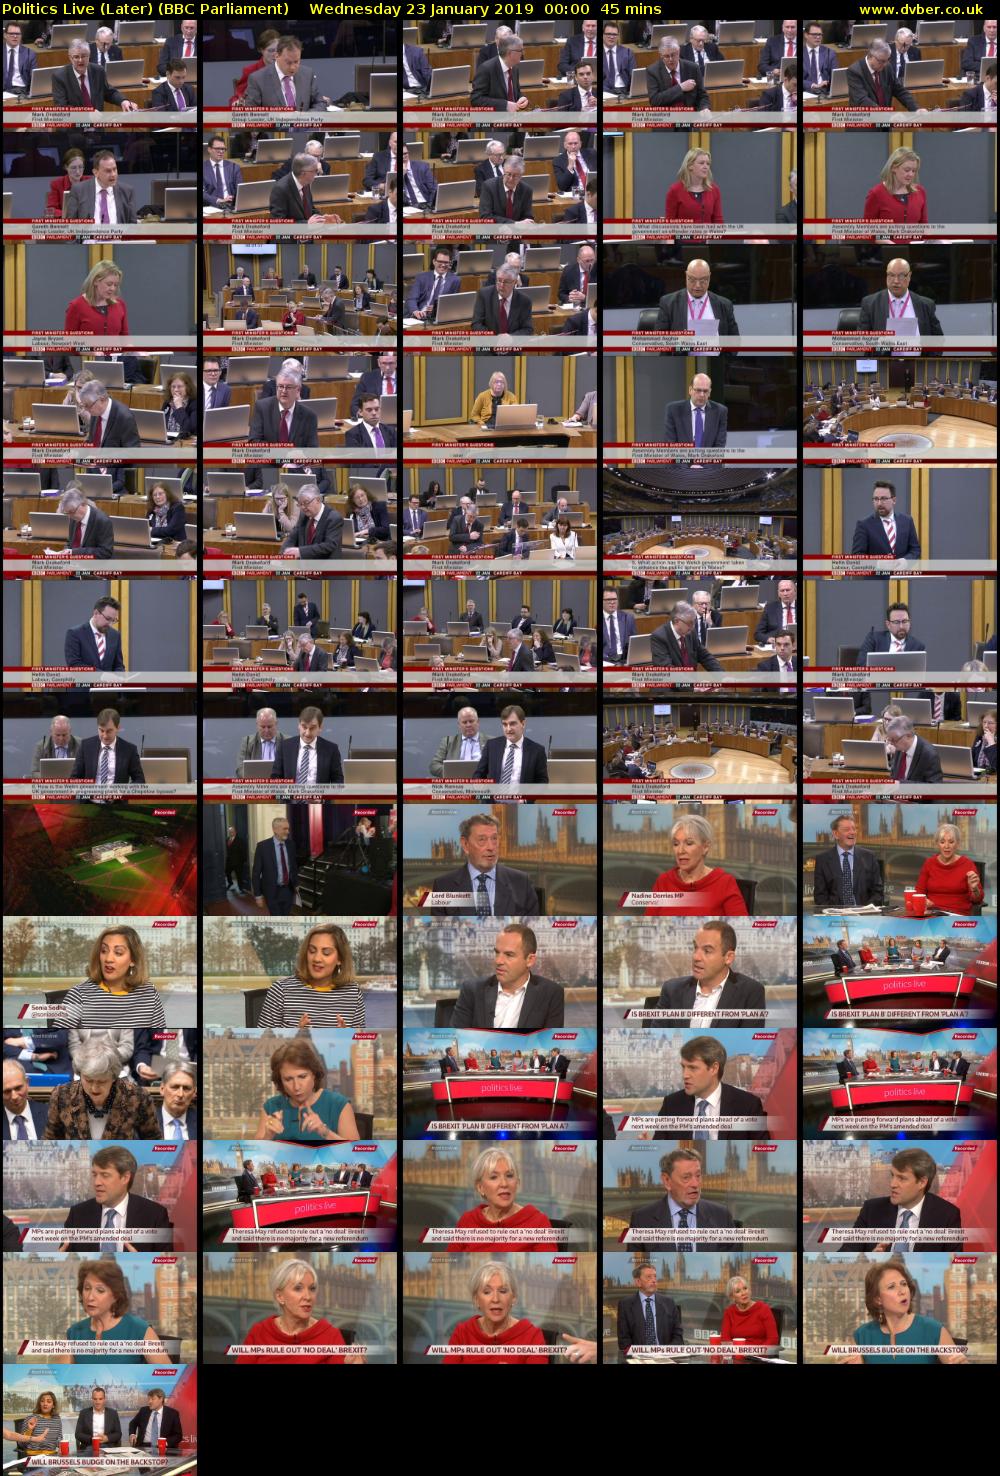 Politics Live (Later) (BBC Parliament) Wednesday 23 January 2019 00:00 - 00:45